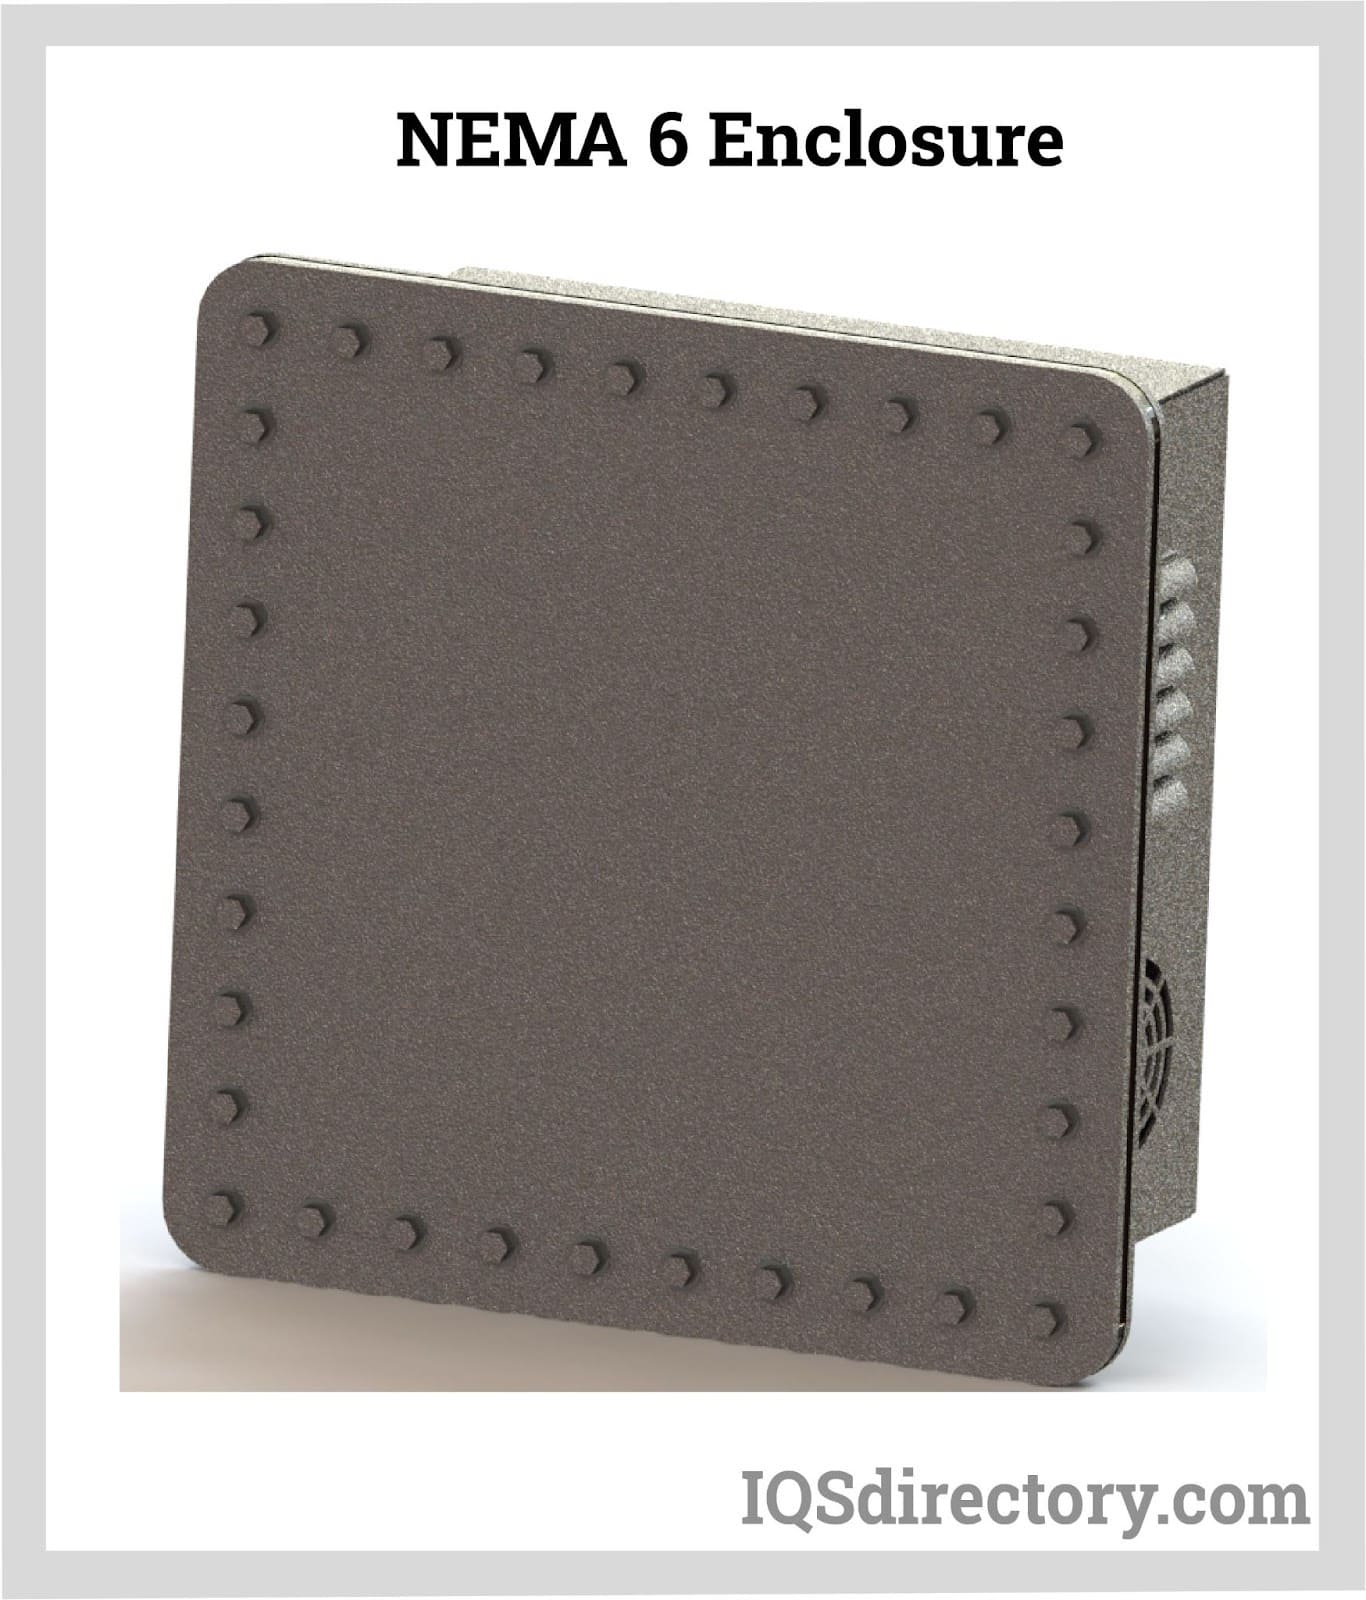 NEMA 6 Enclosure